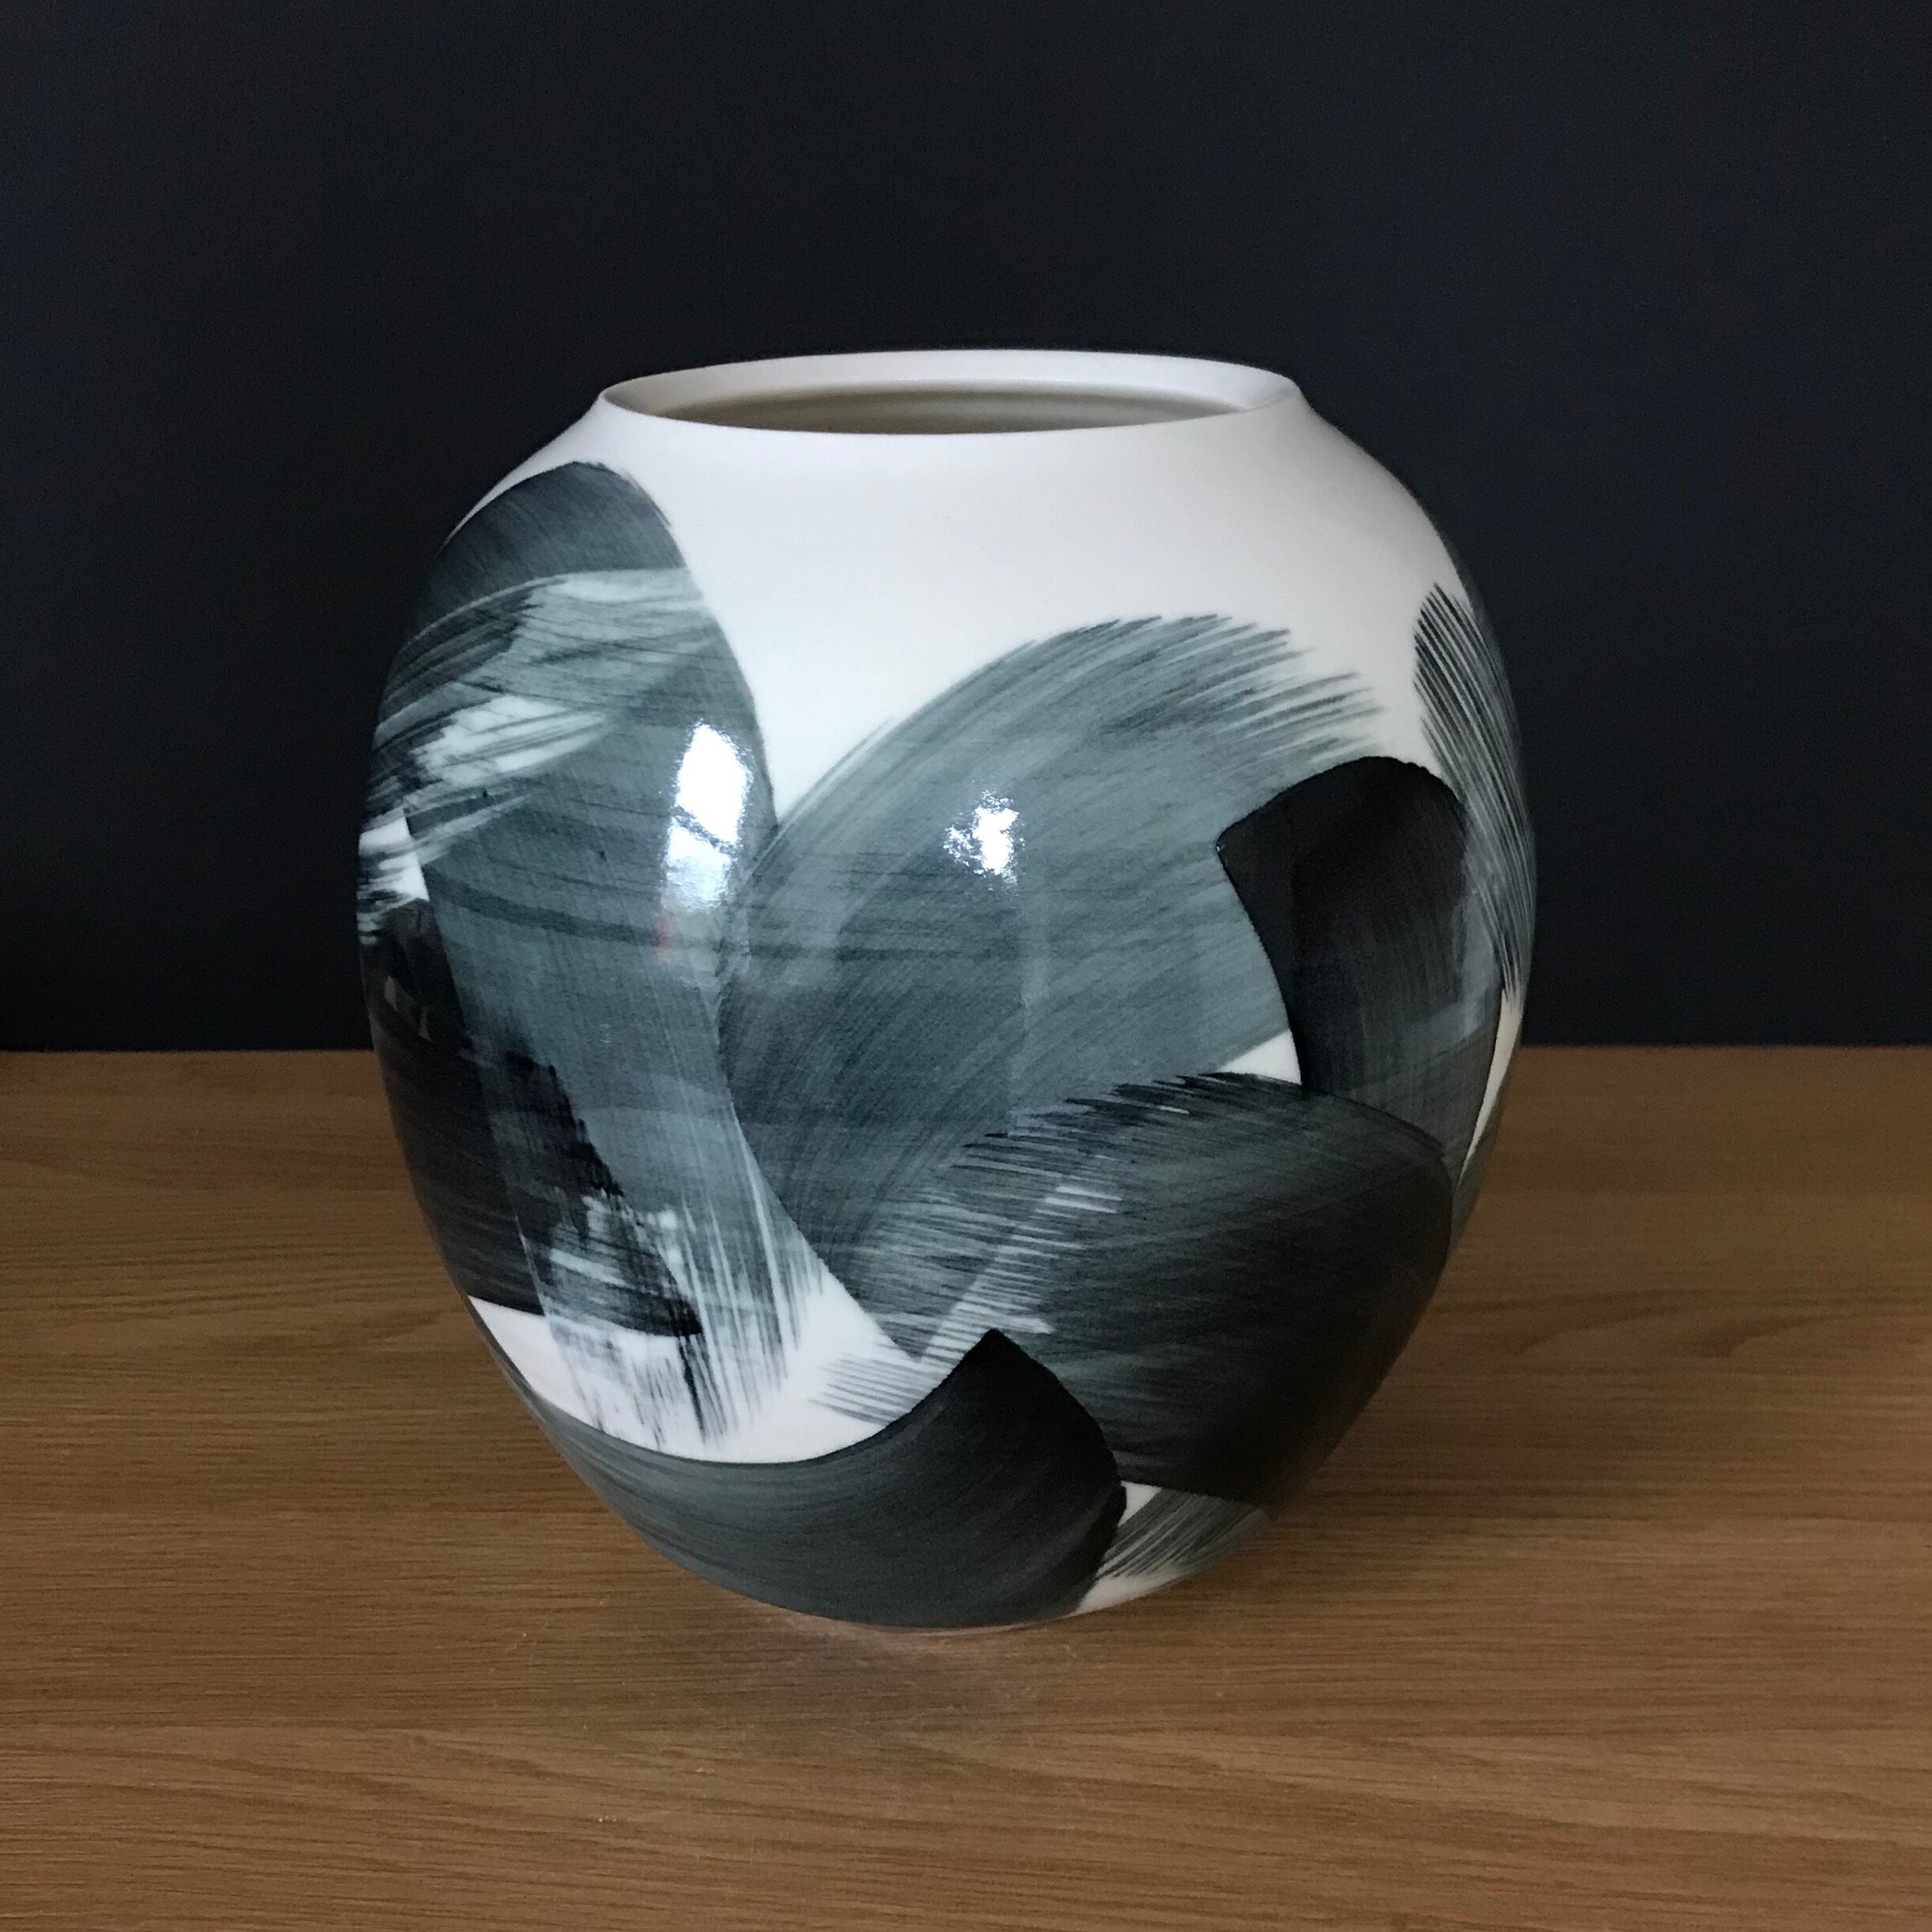 tom-kemp-porcelain-vase-28.jpg